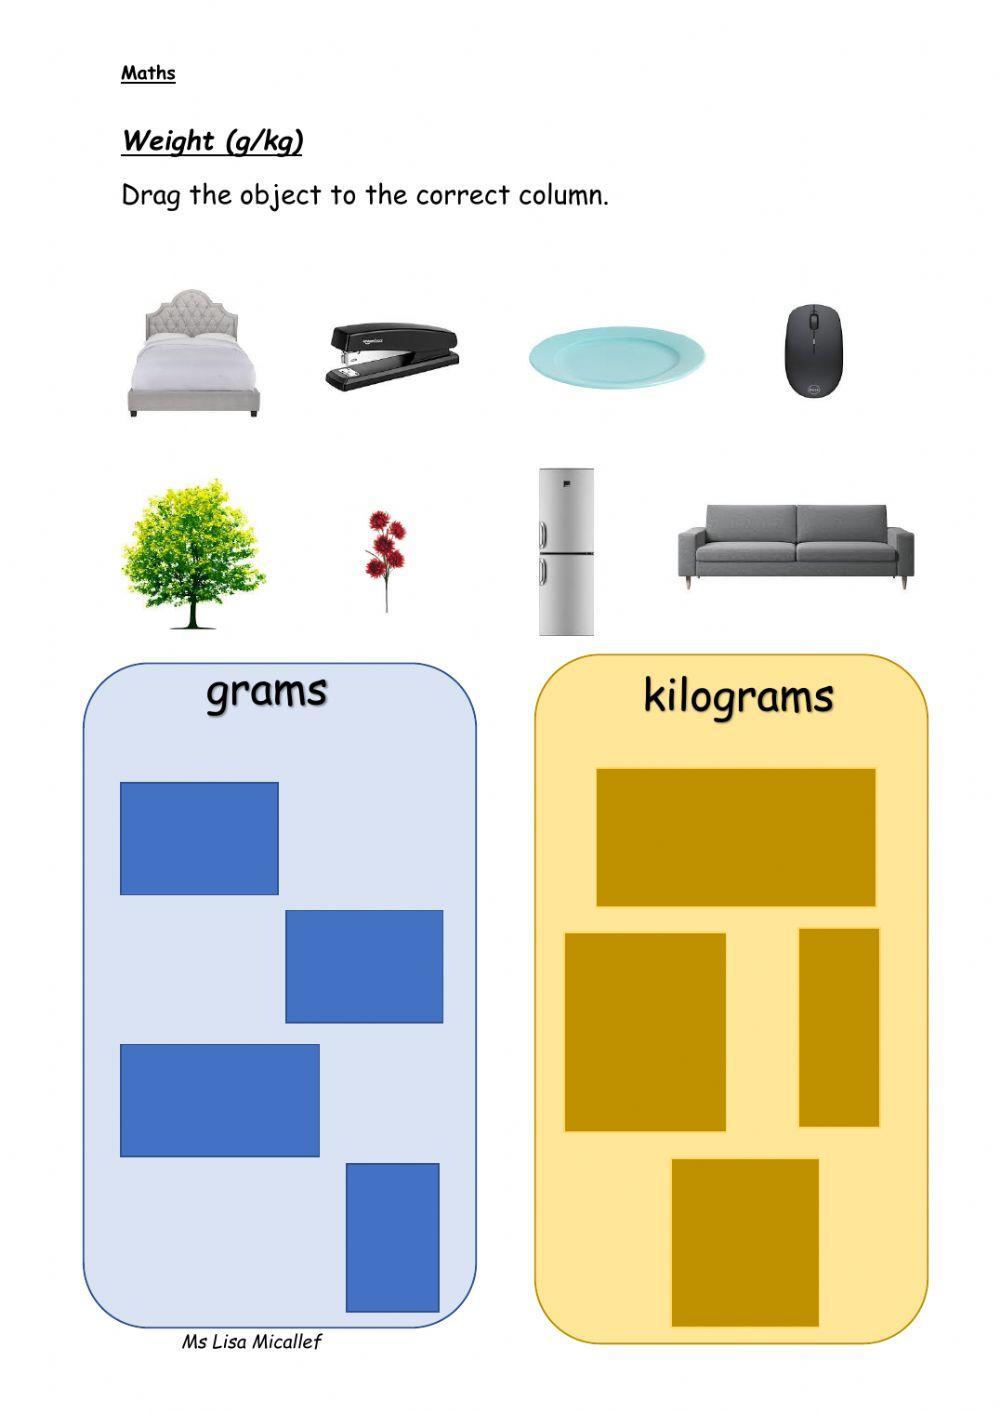 Grams or Kilograms